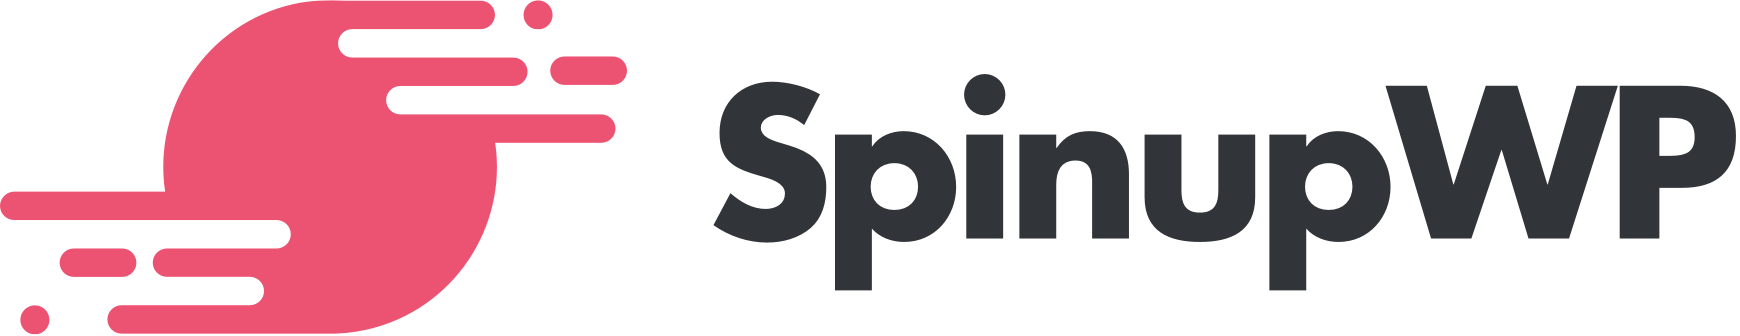 The SpinupWP logo.